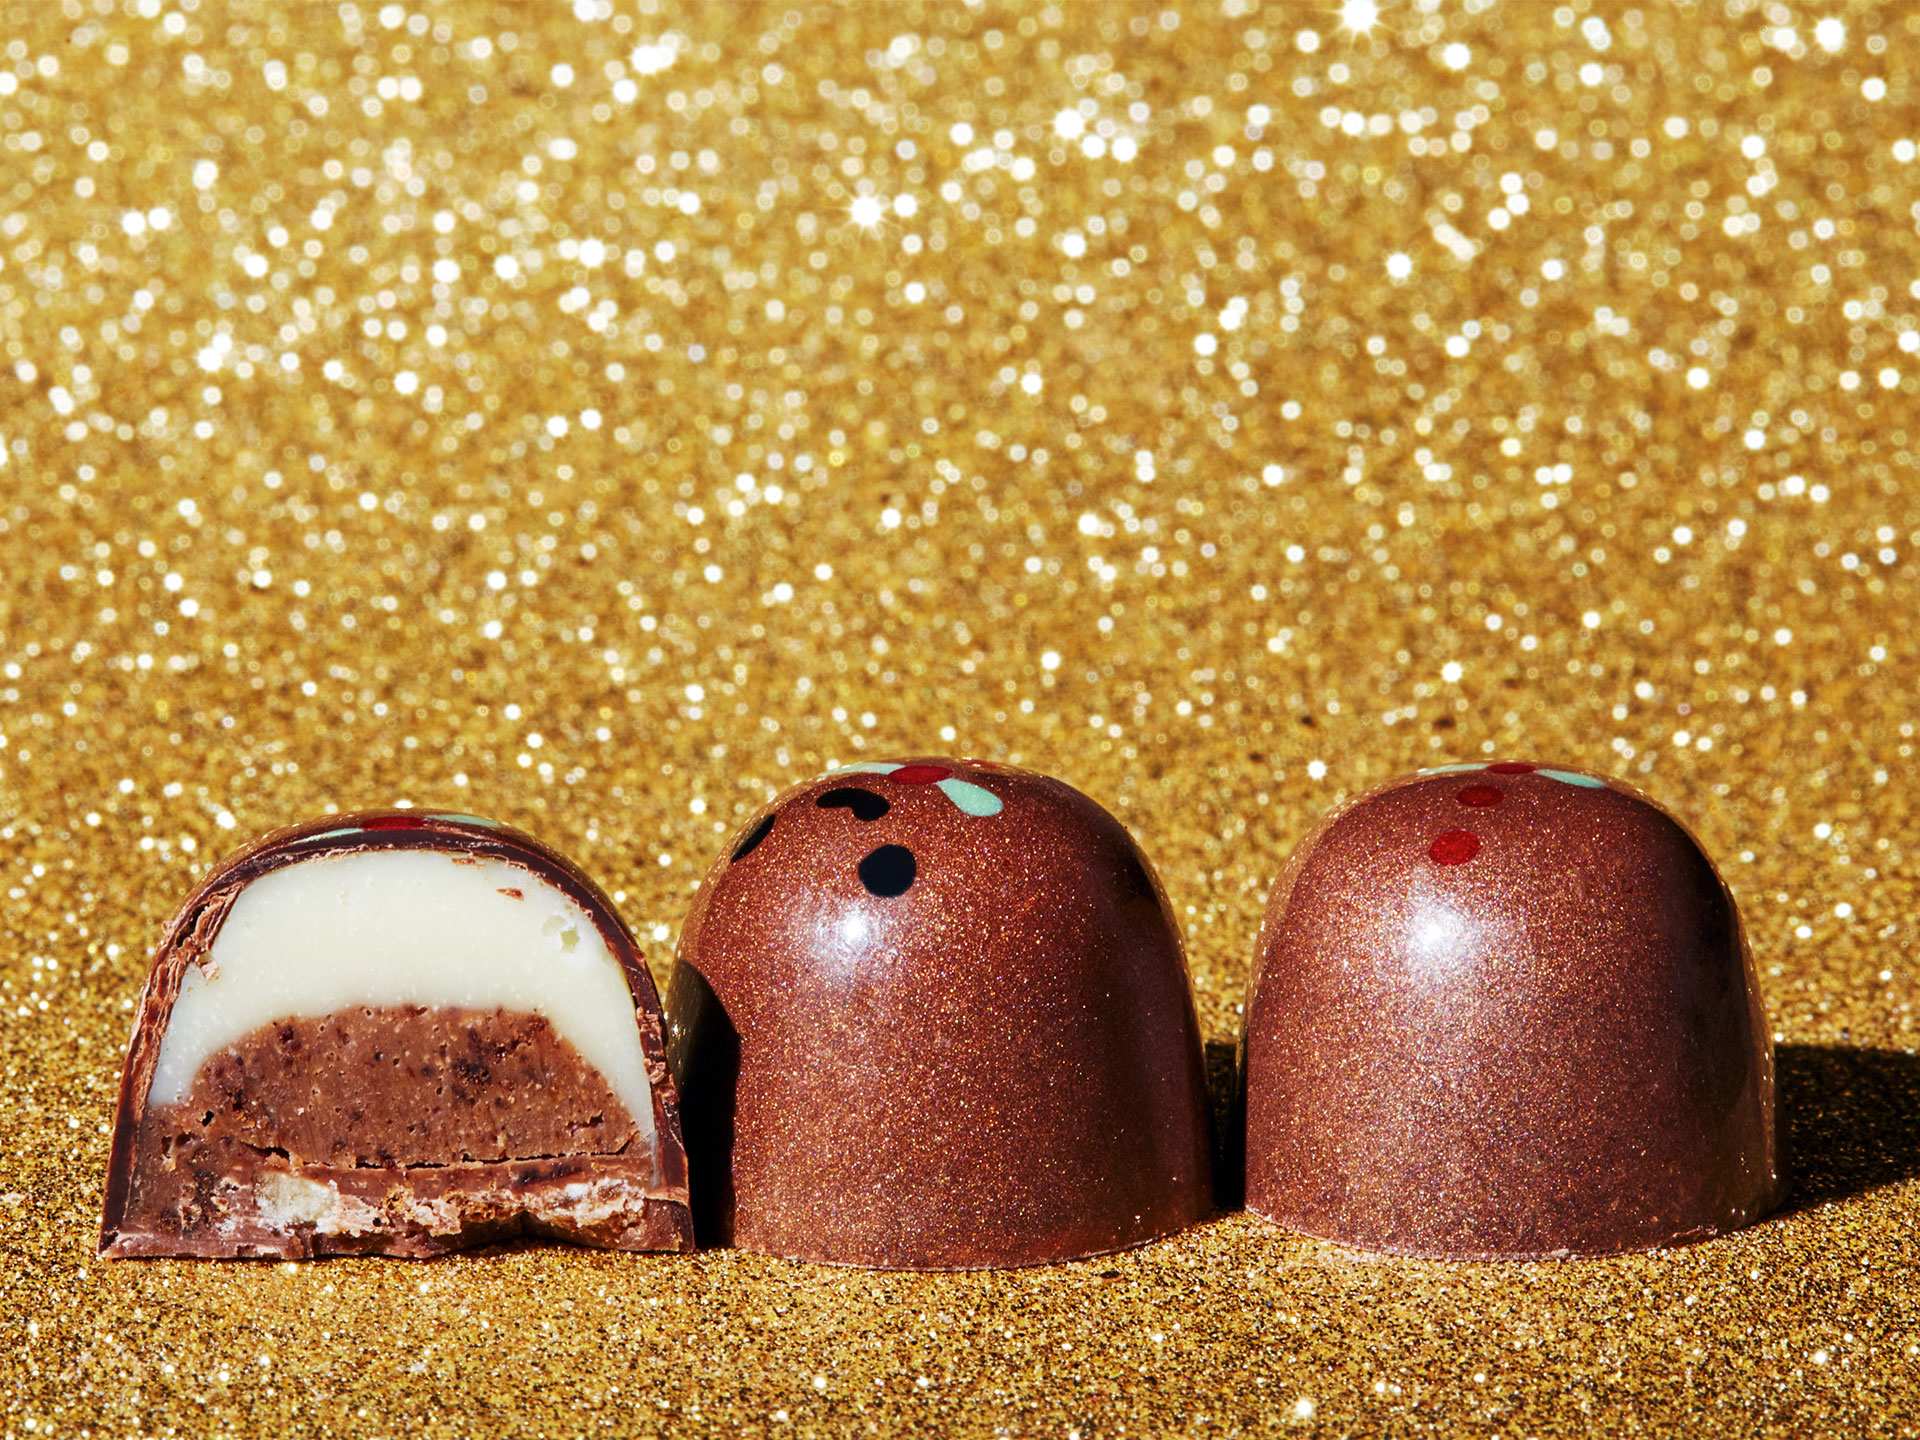 How to make chocolate | Gingerbread men holiday chocolates from Chocolat de Kat